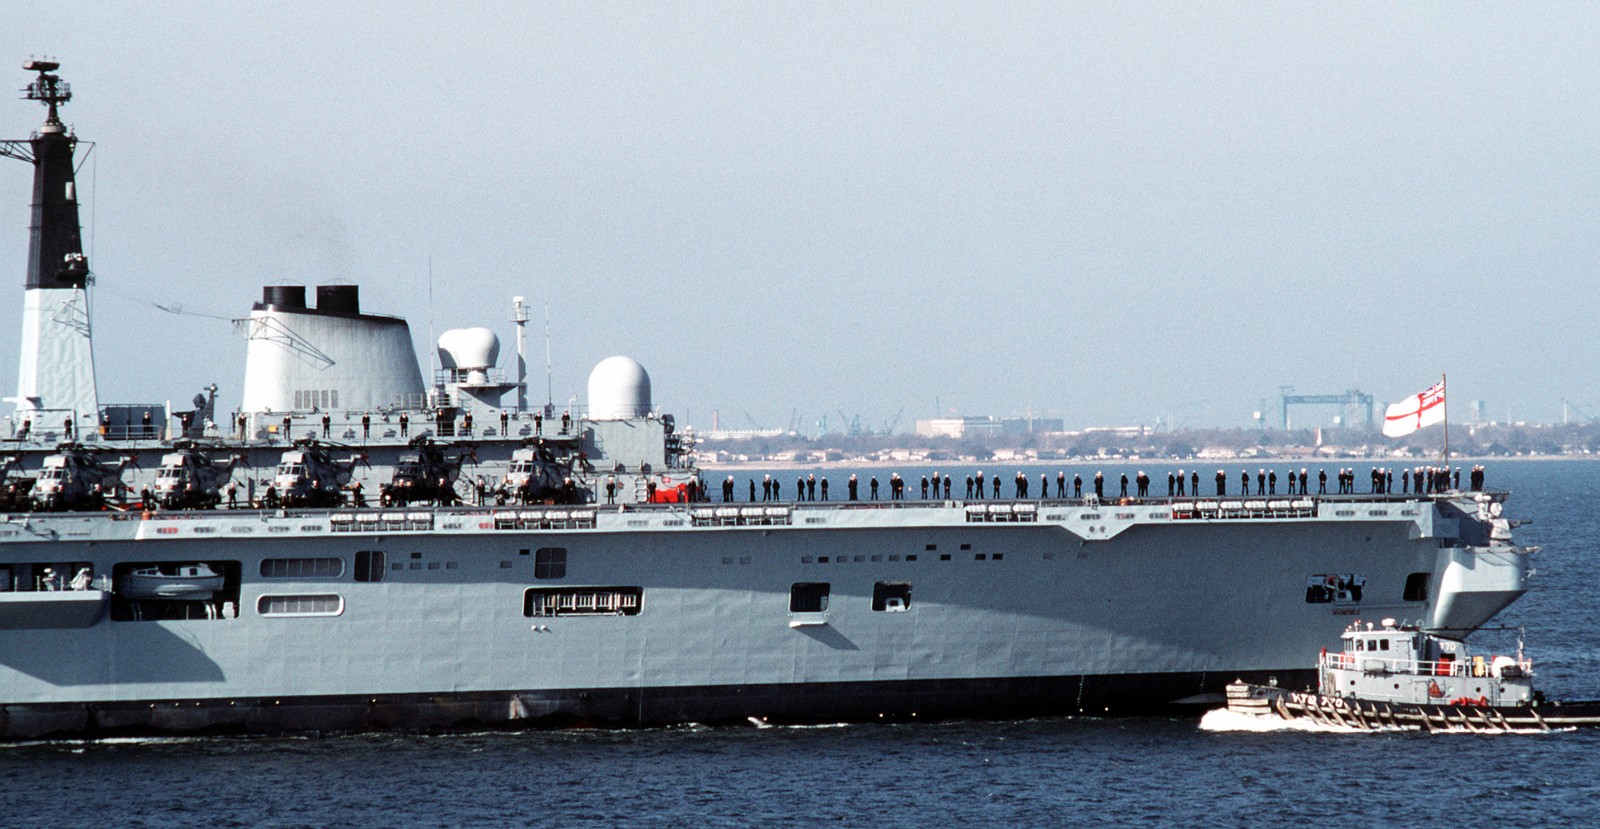 r-05 hms invincible class aircraft carrier royal navy 24